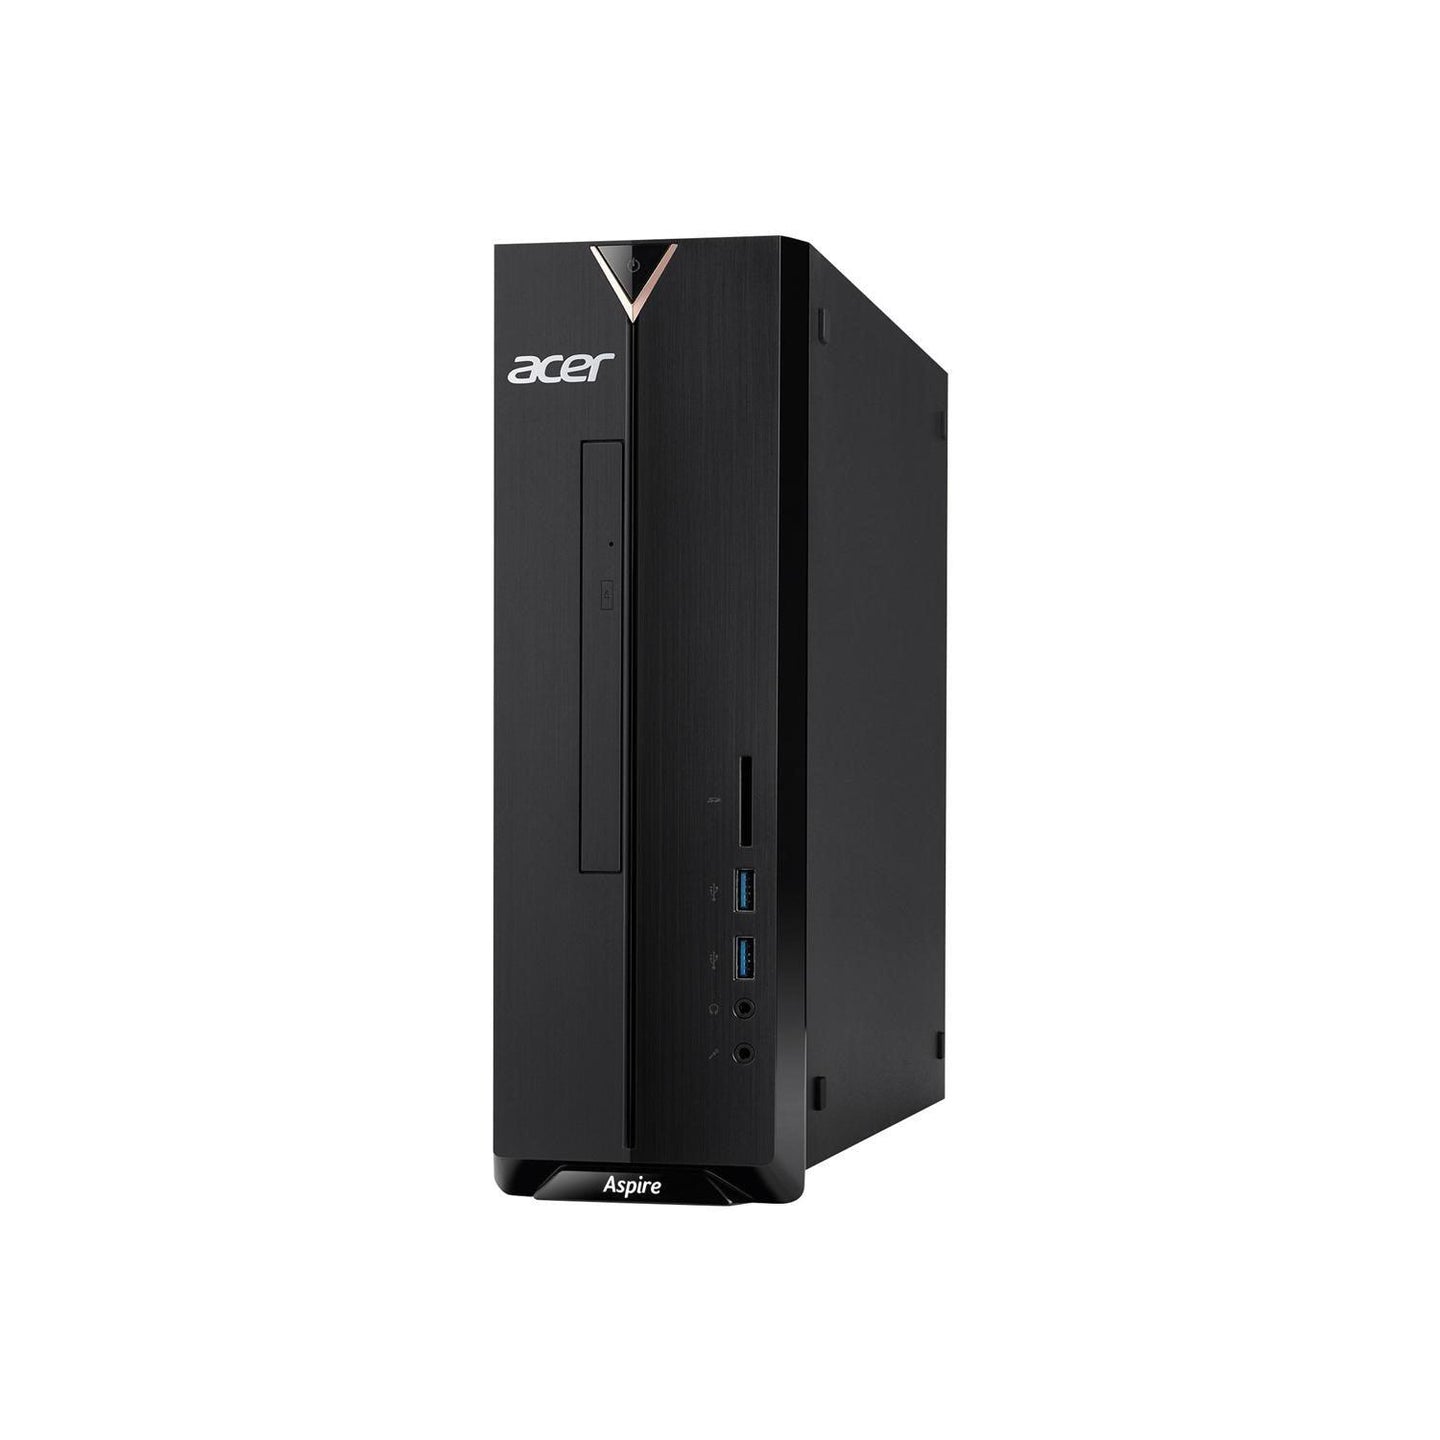 Acer Aspire XC-885 Desktop PC Intel Core i3-8100 4GB DDR4 250GB HDD WIN 10 HOME